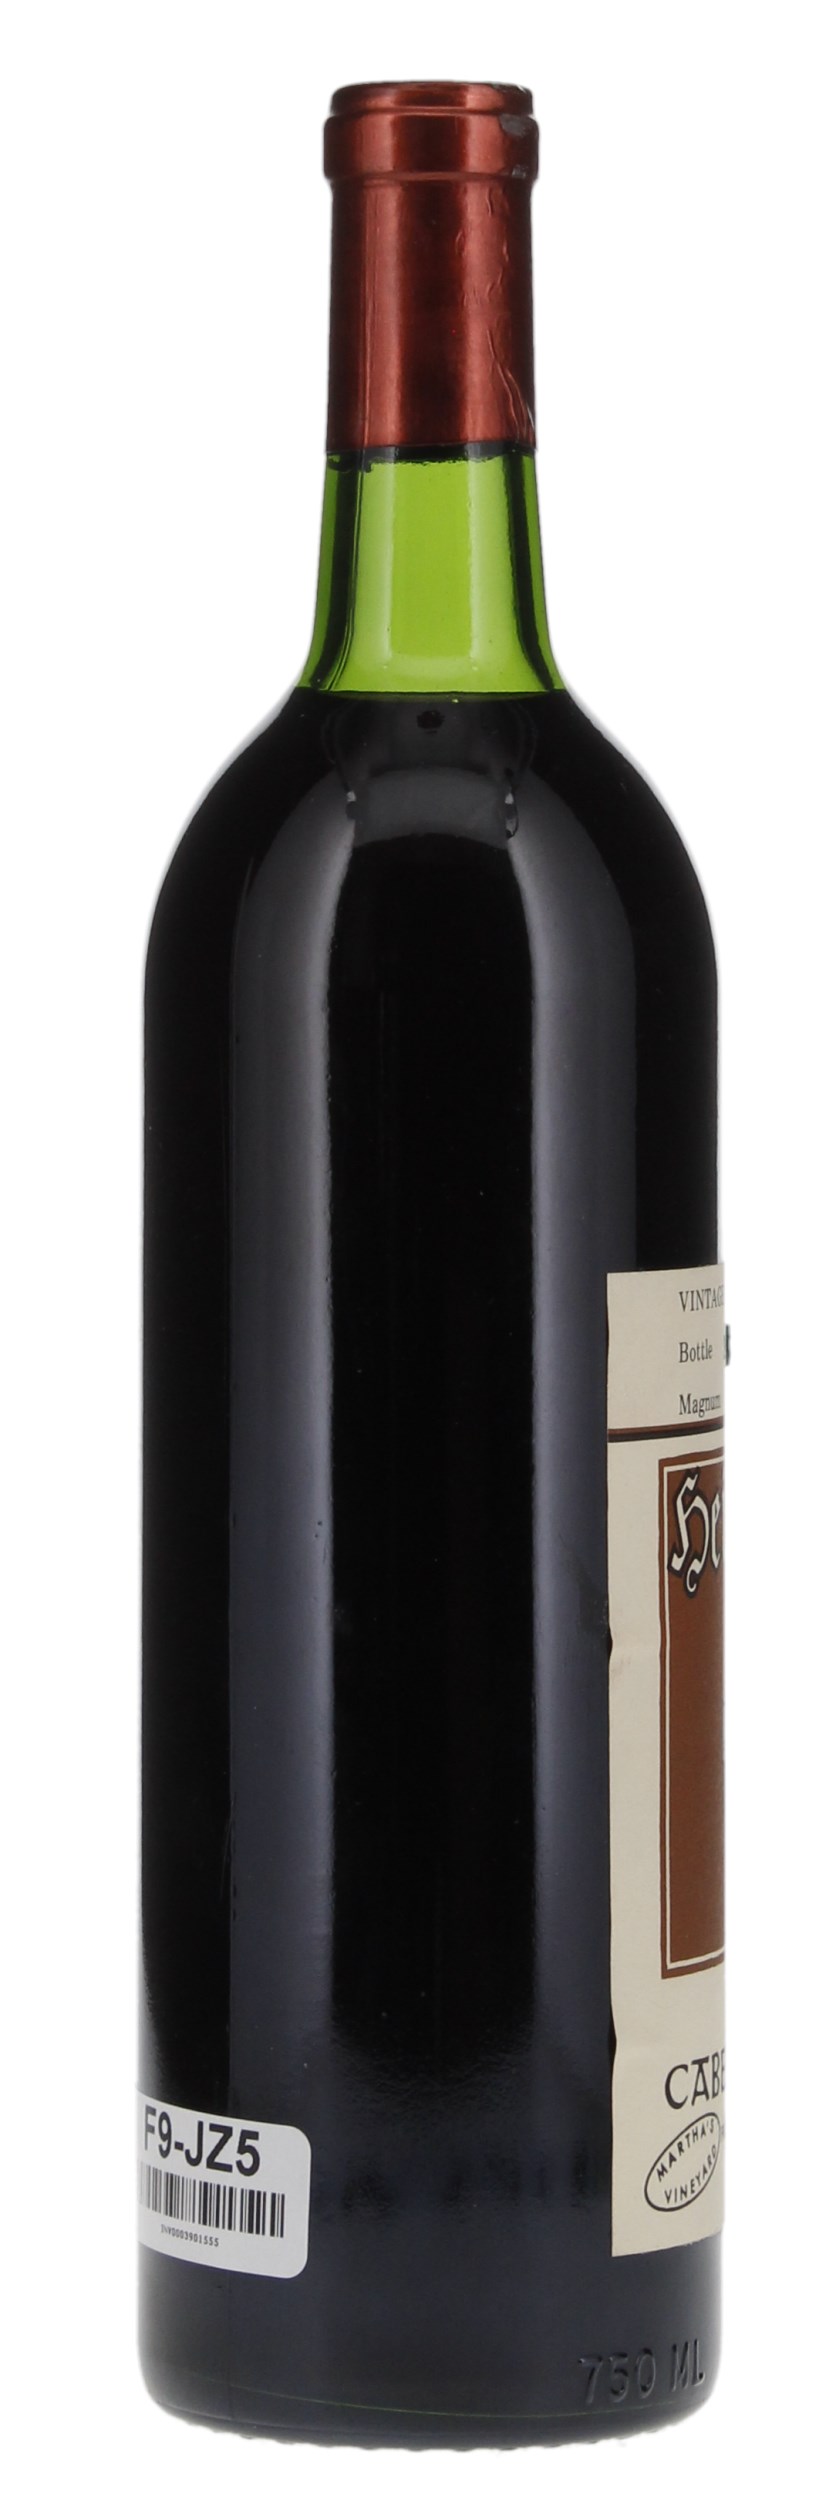 1978 Heitz Martha's Vineyard Cabernet Sauvignon, 750ml